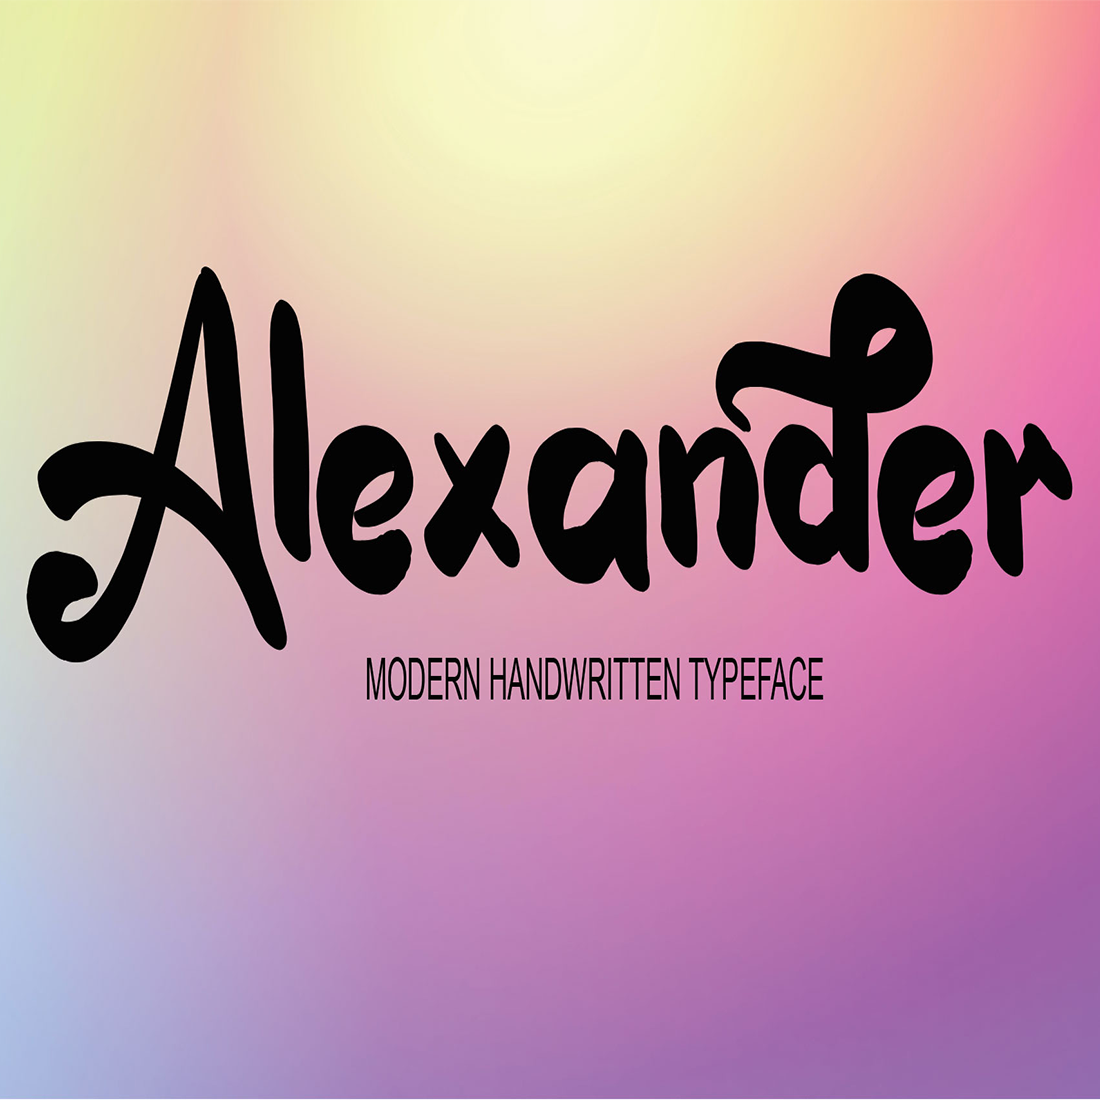 Handwriting Sans Serif Font Alexander Design cover image.